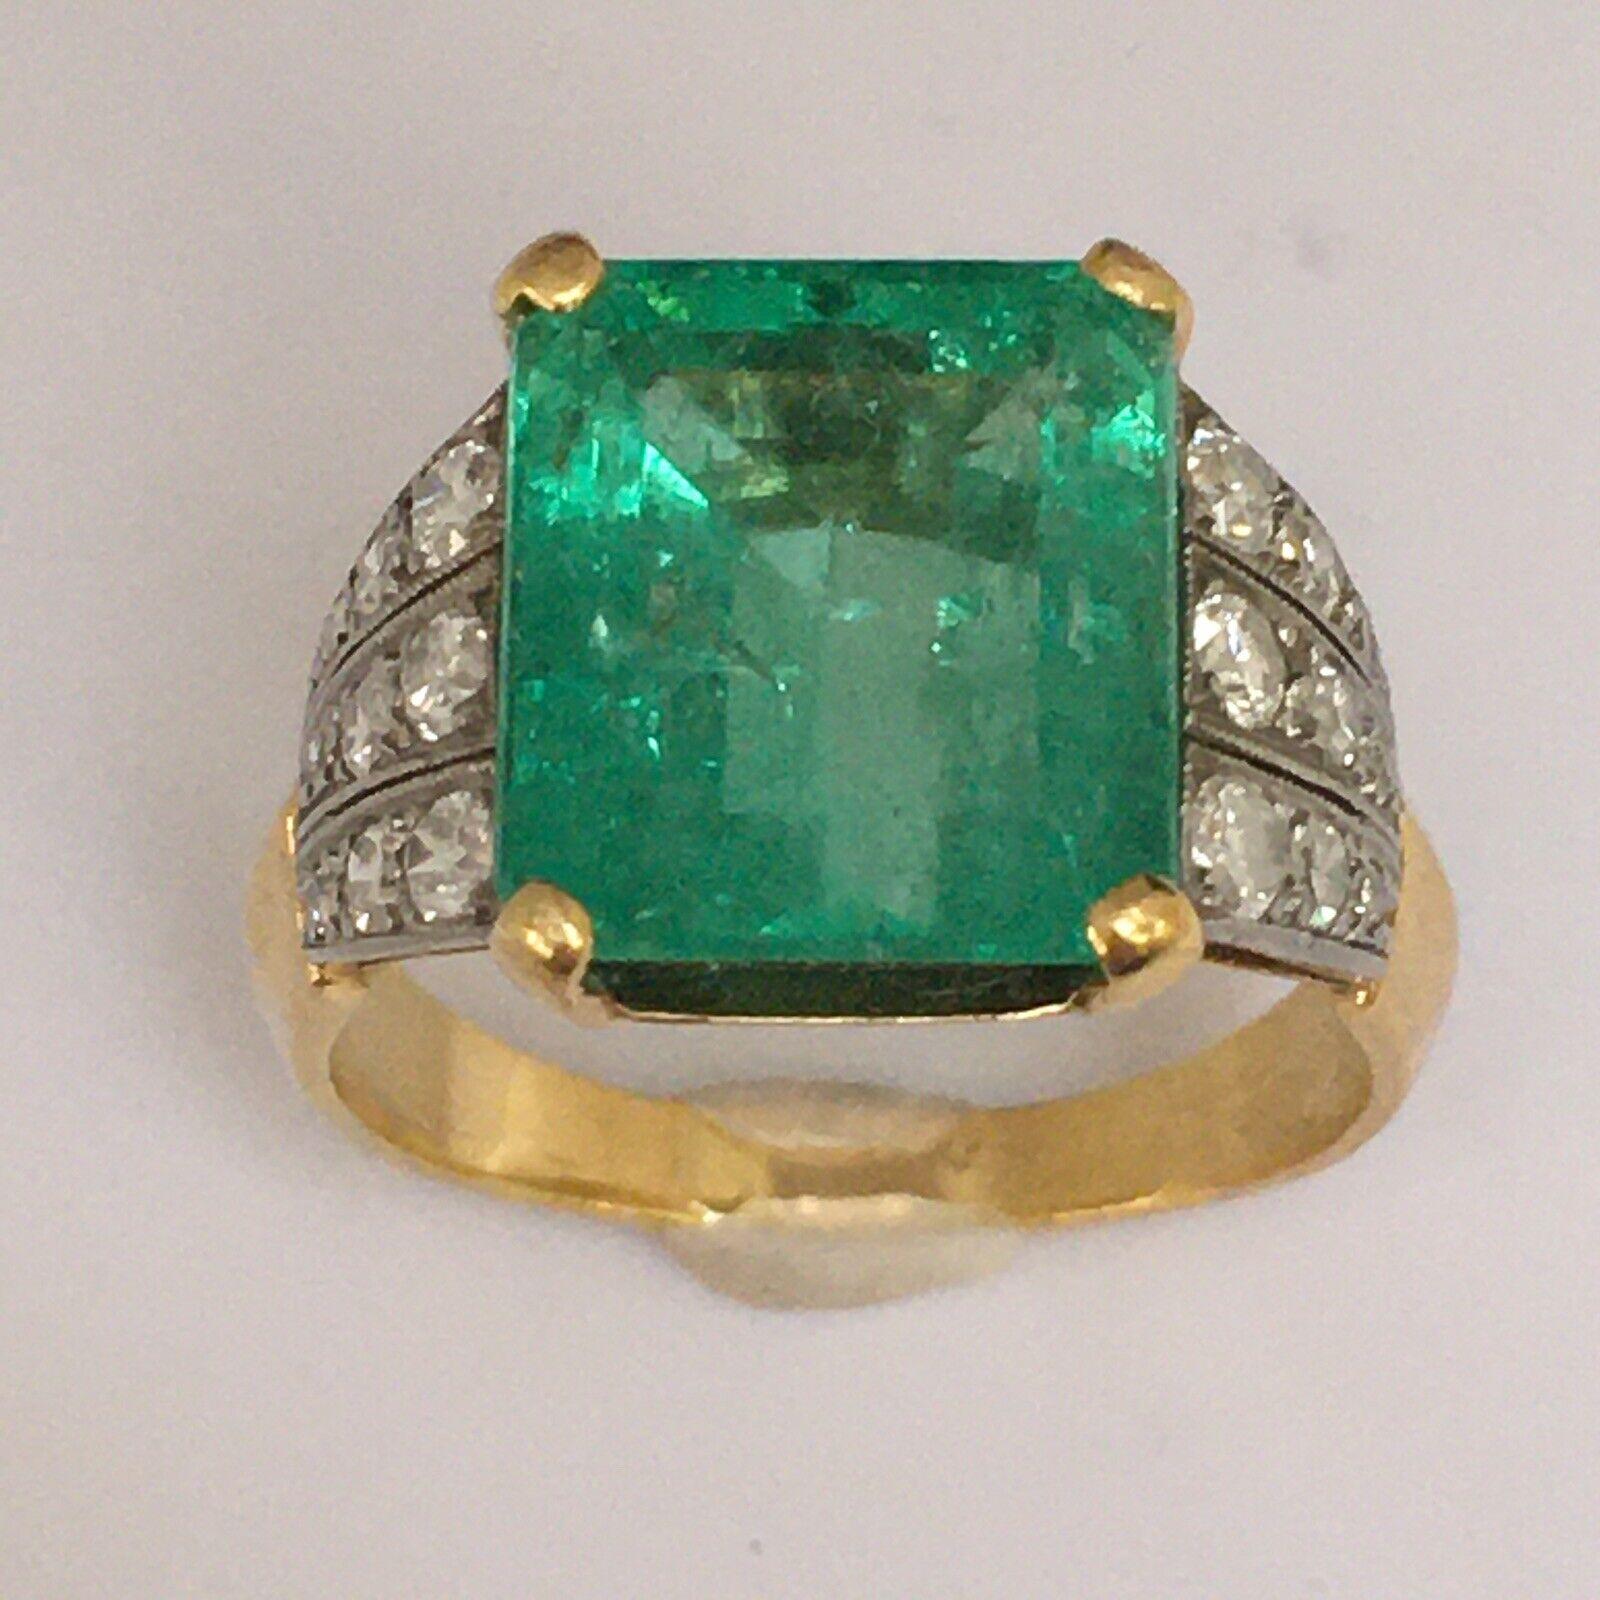 For Sale:  Edwardian 1900s Antique 6 Carat Colombian Emerald Diamond 18K Ring Size 7.5 3